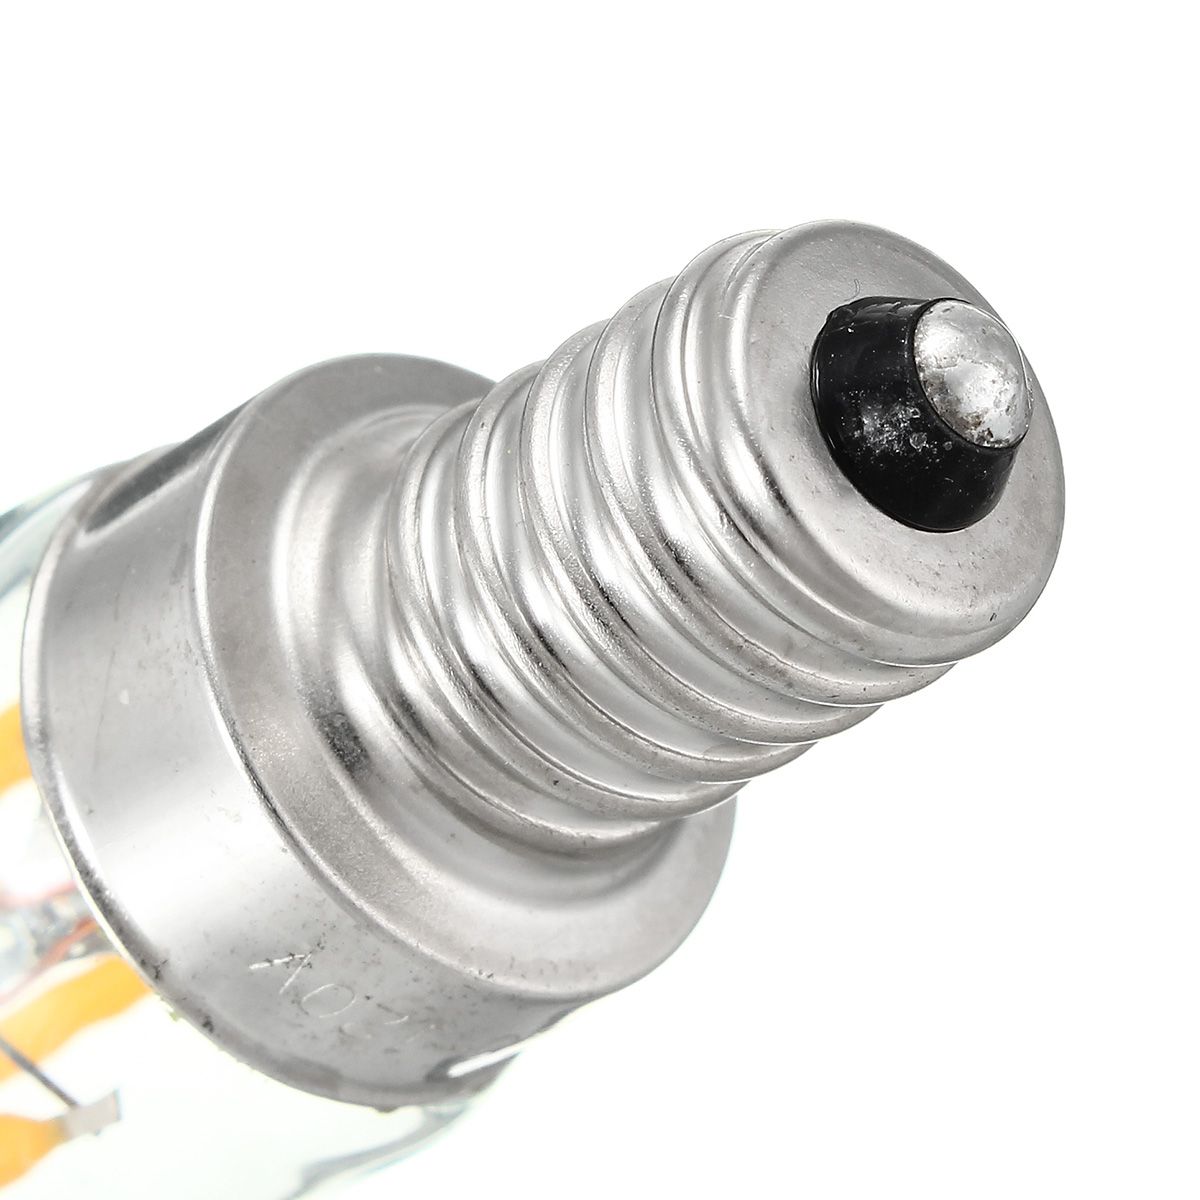 Dimmable-Vintage-2W-E12-E14-T20-Refrigerator-LED-COB-Filament-Bulb-Warm-White-1128752